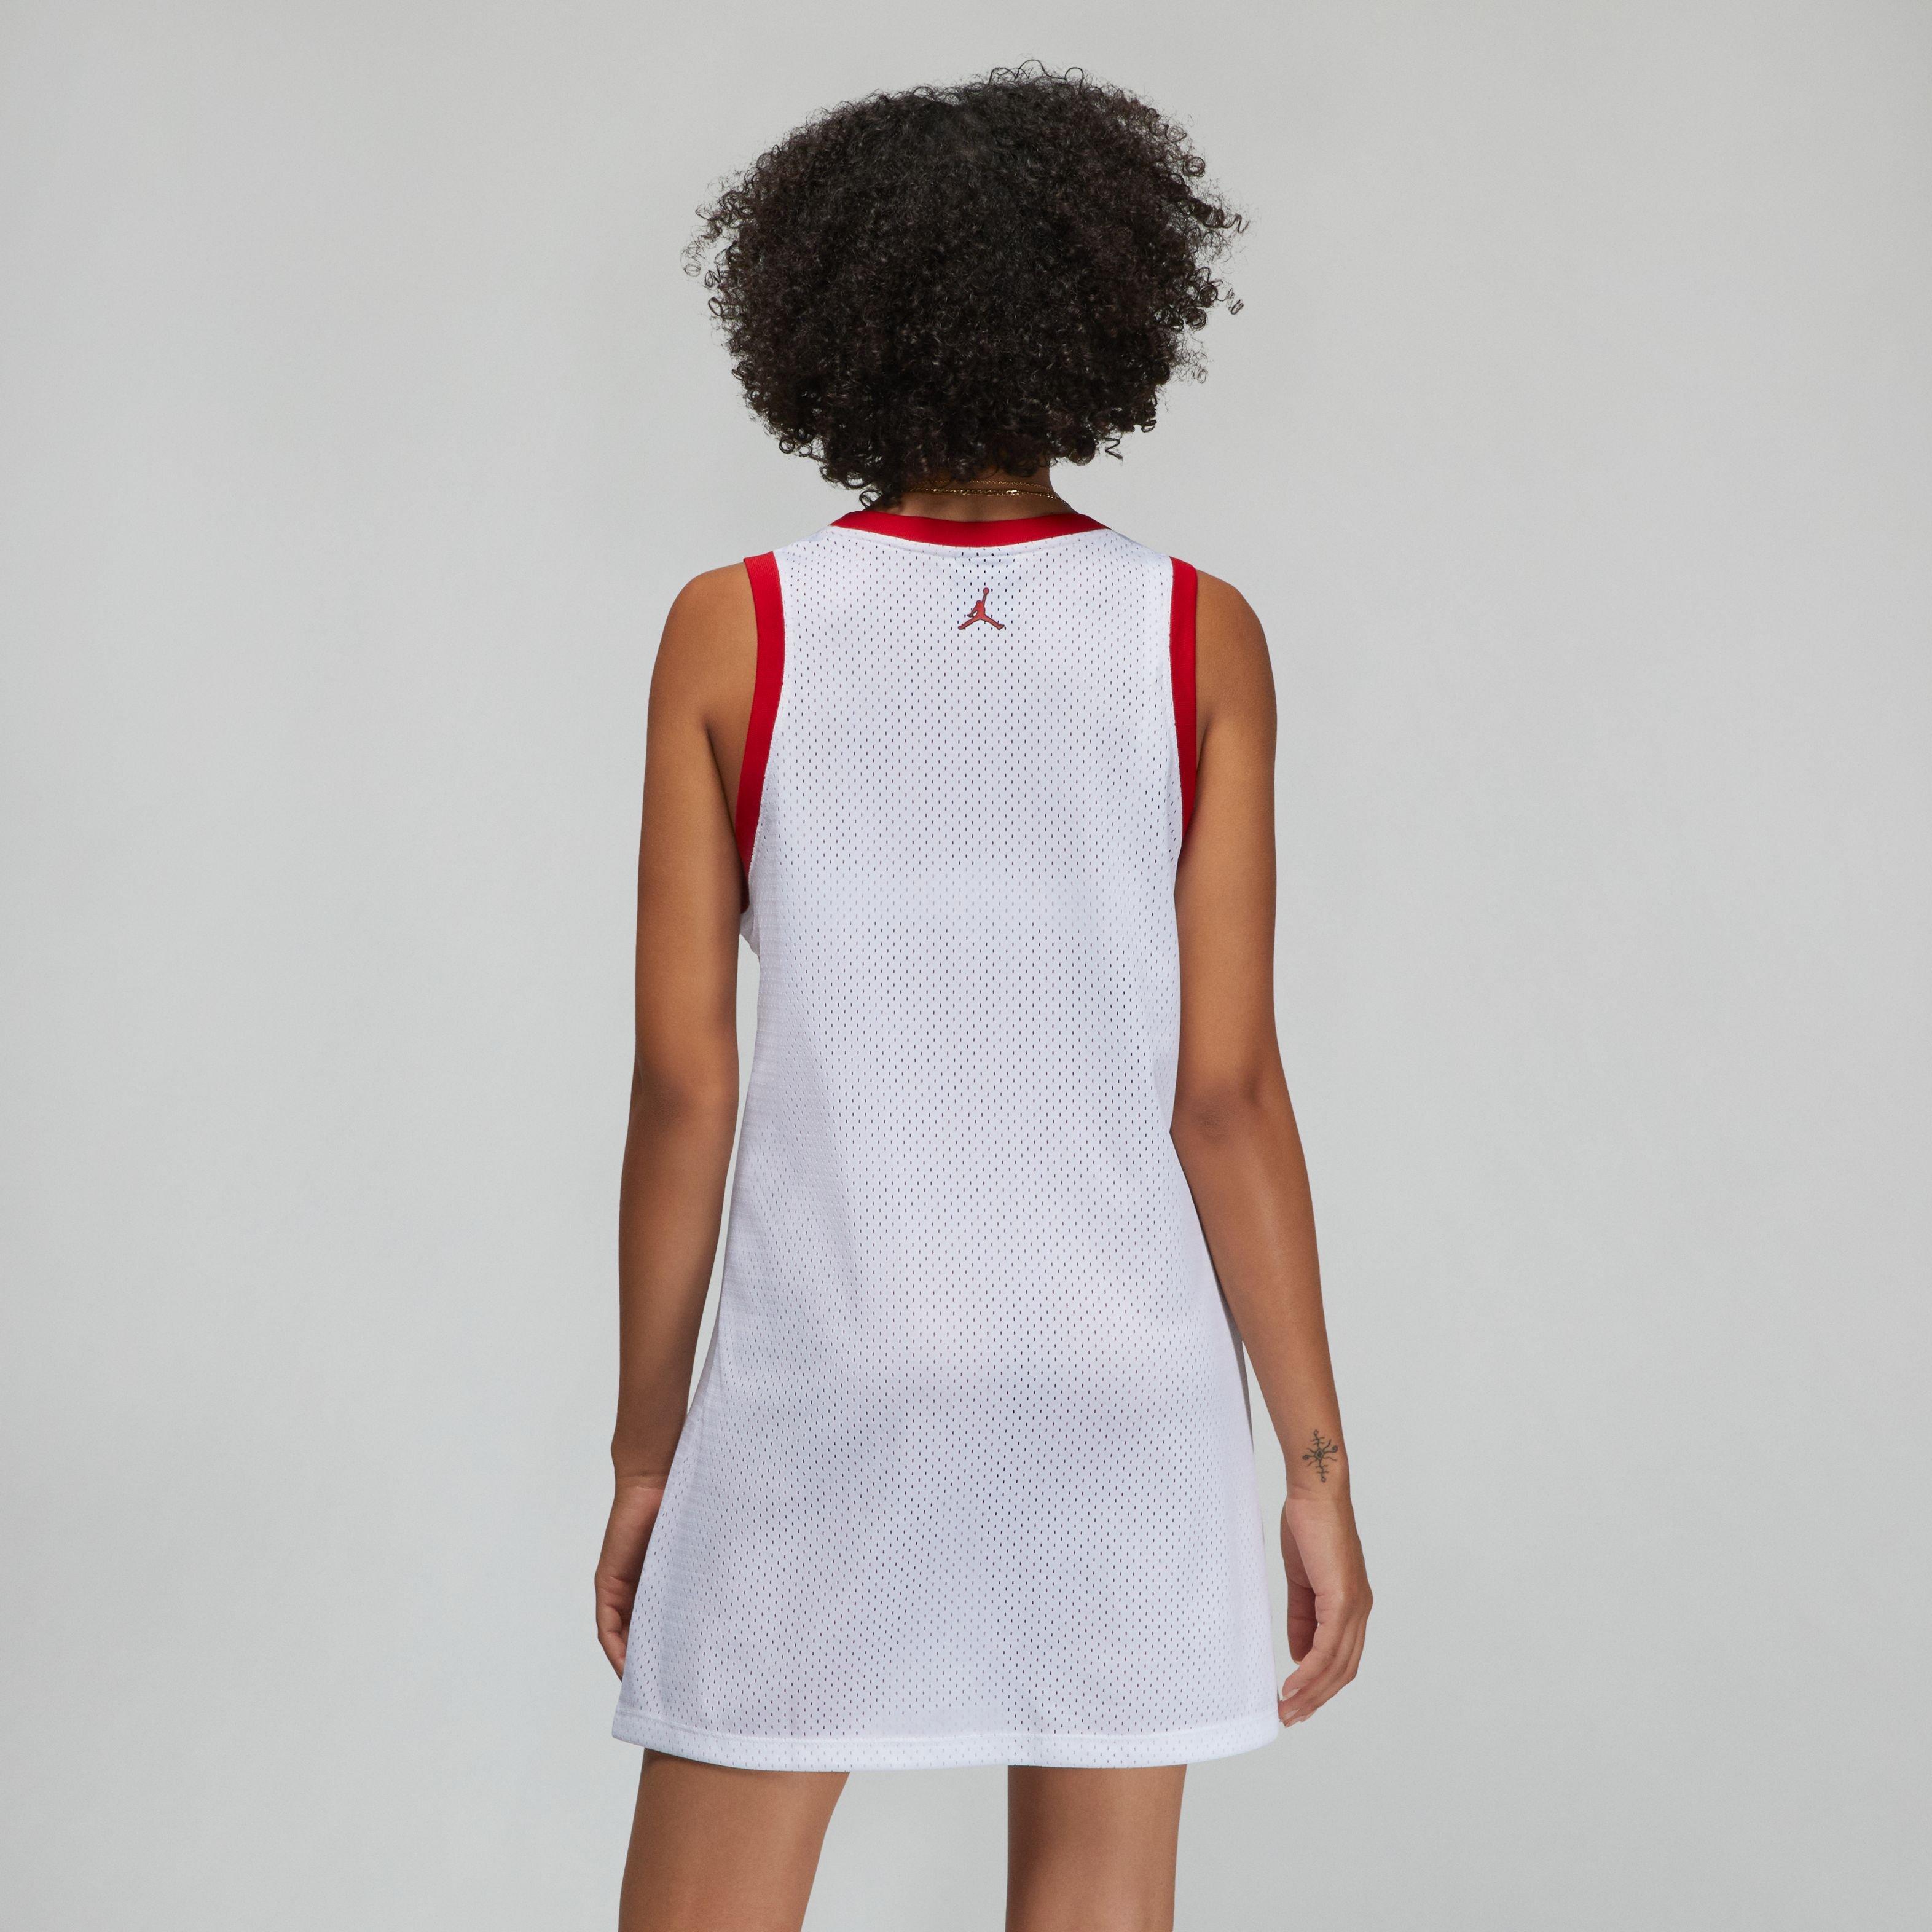 Jordan Women's Heritage Jersey Dress-White/Red - Hibbett